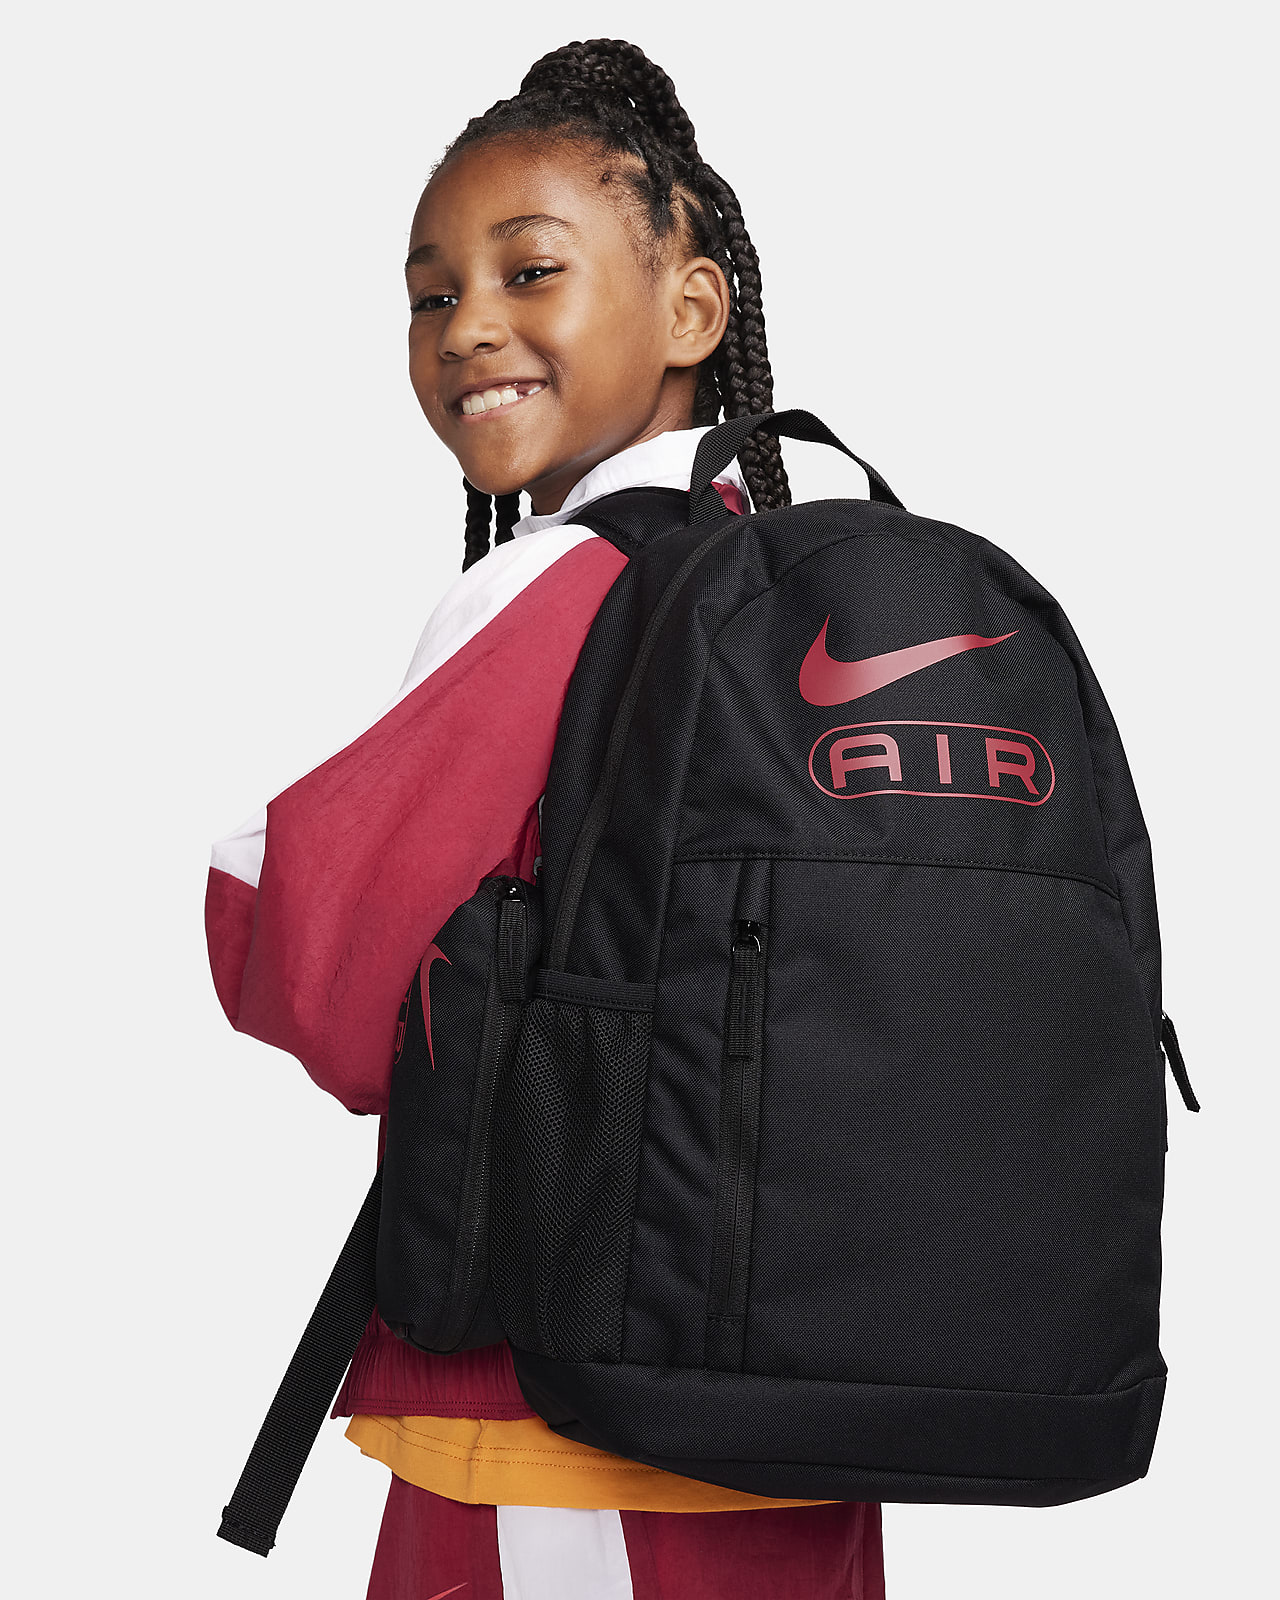 Nike Rugzak voor kids (20 liter)